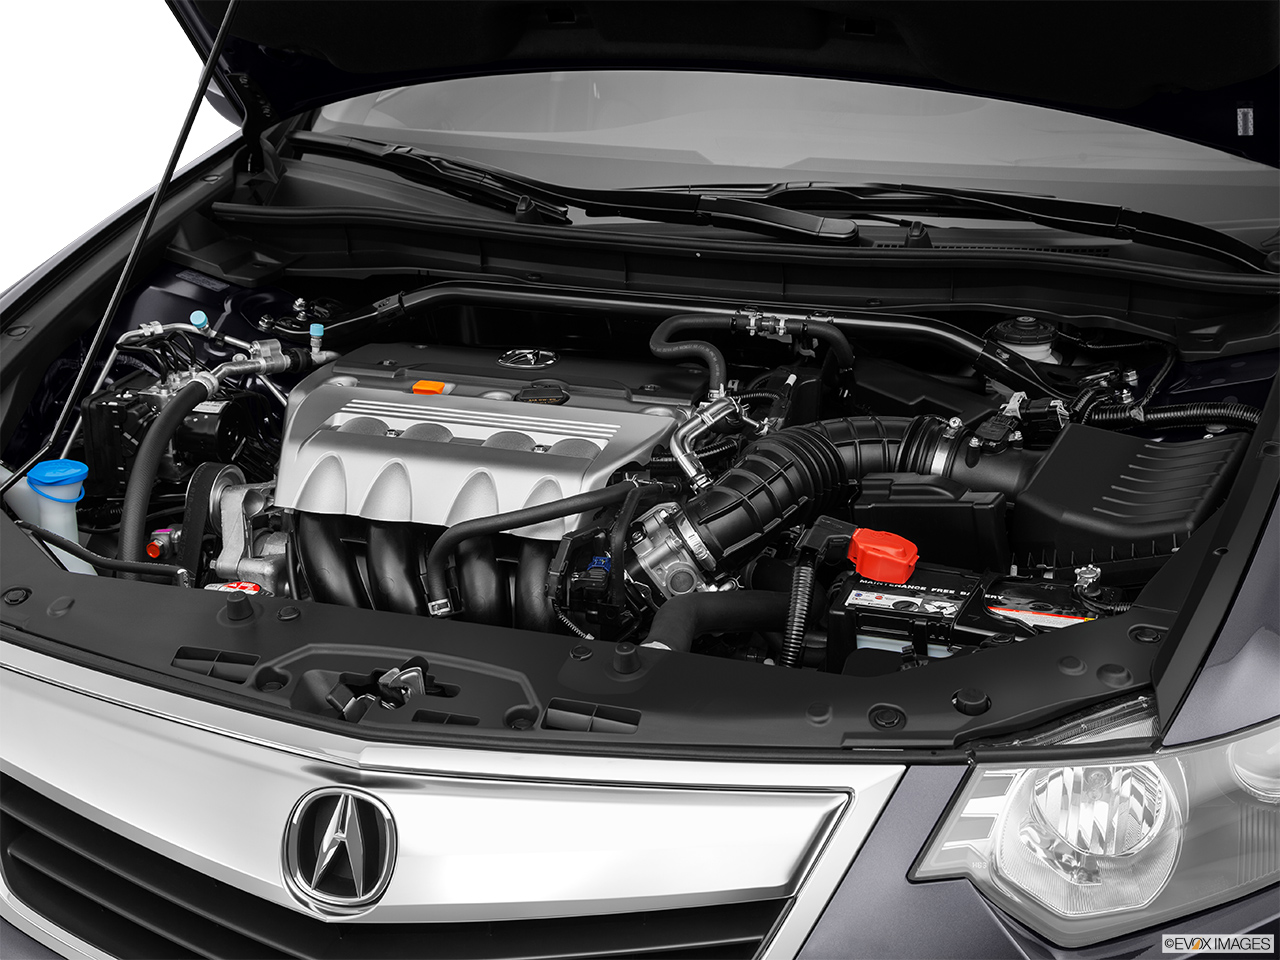 2014 Acura TSX 5-Speed Automatic Engine. 